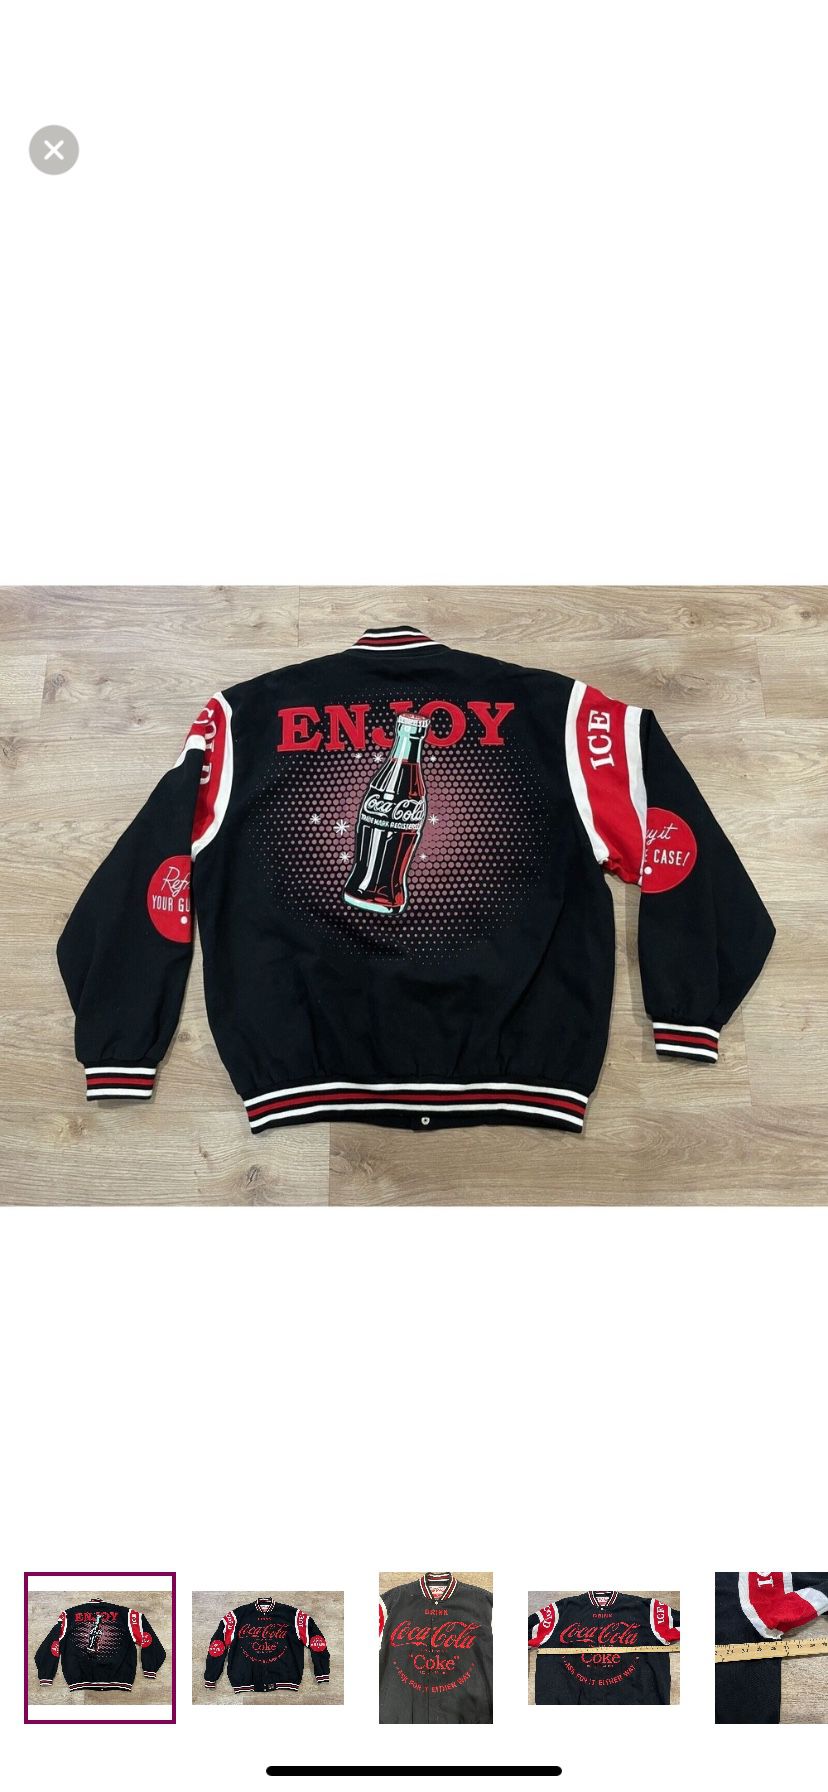 JH Design Coca Cola or Coke NASCAR inspired embroidered jacket men’s XL